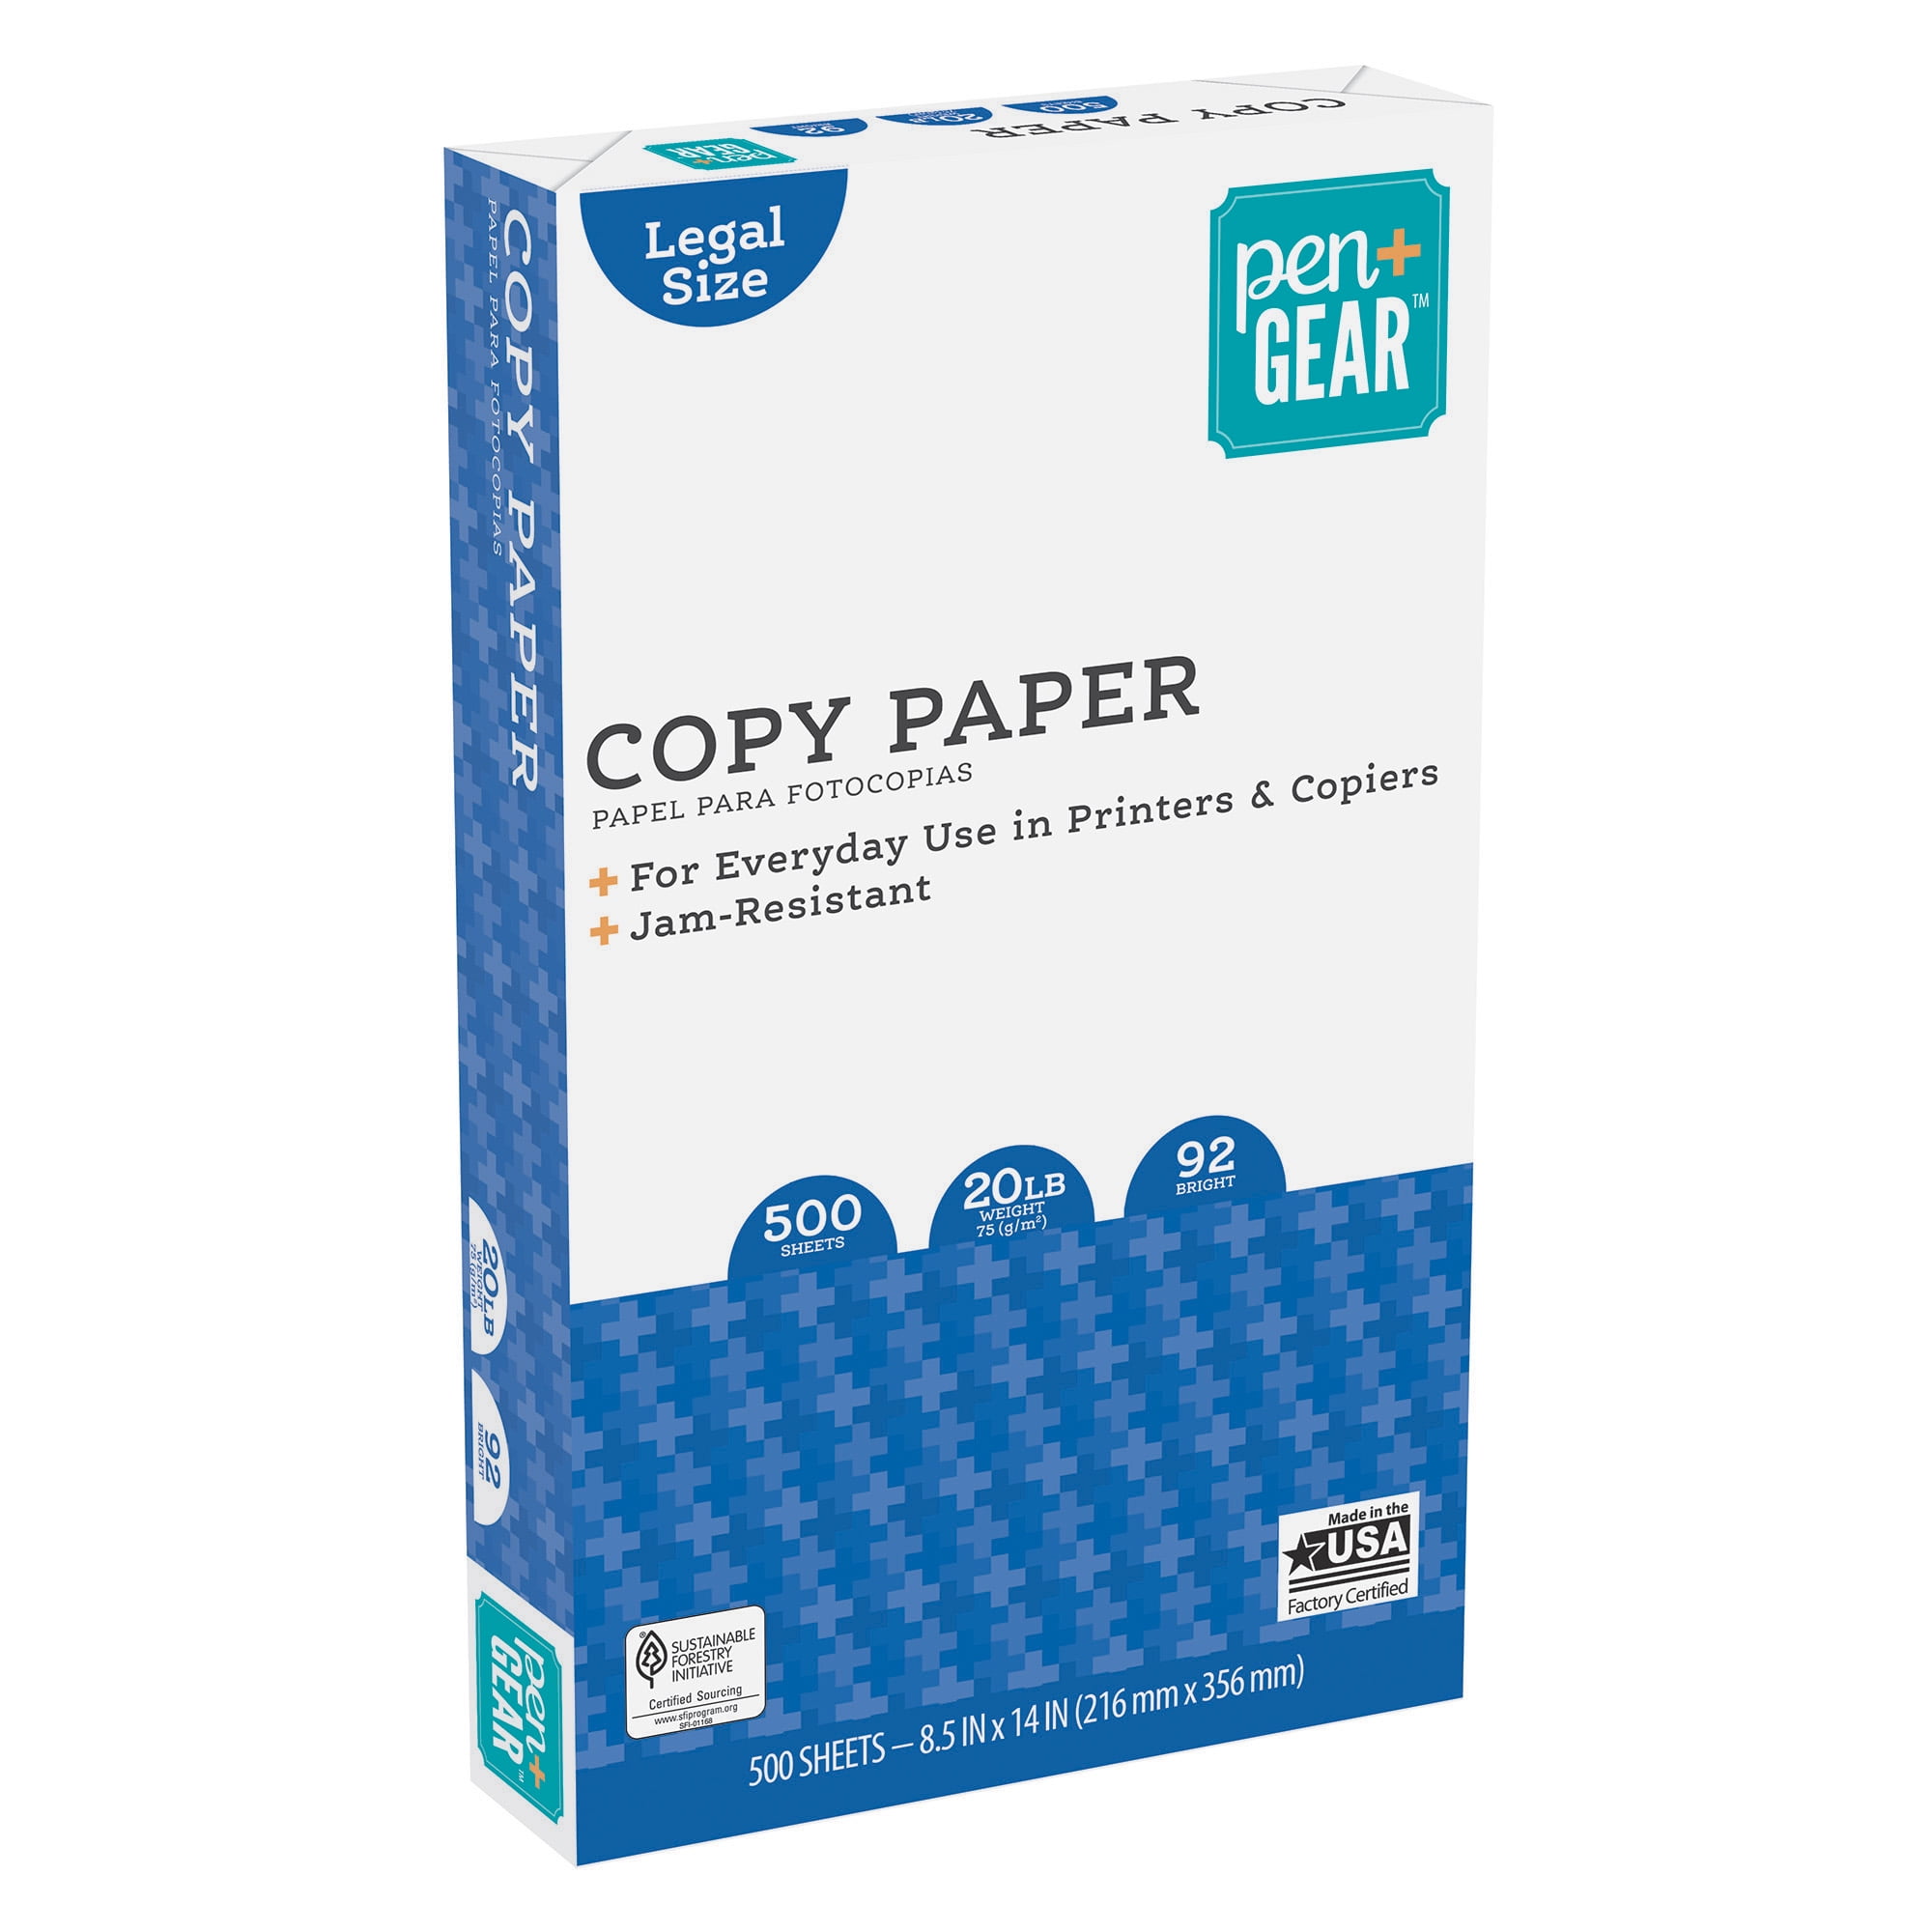 Pen+Gear Copy Paper Classic White Print paper Size 8.5x11, 1